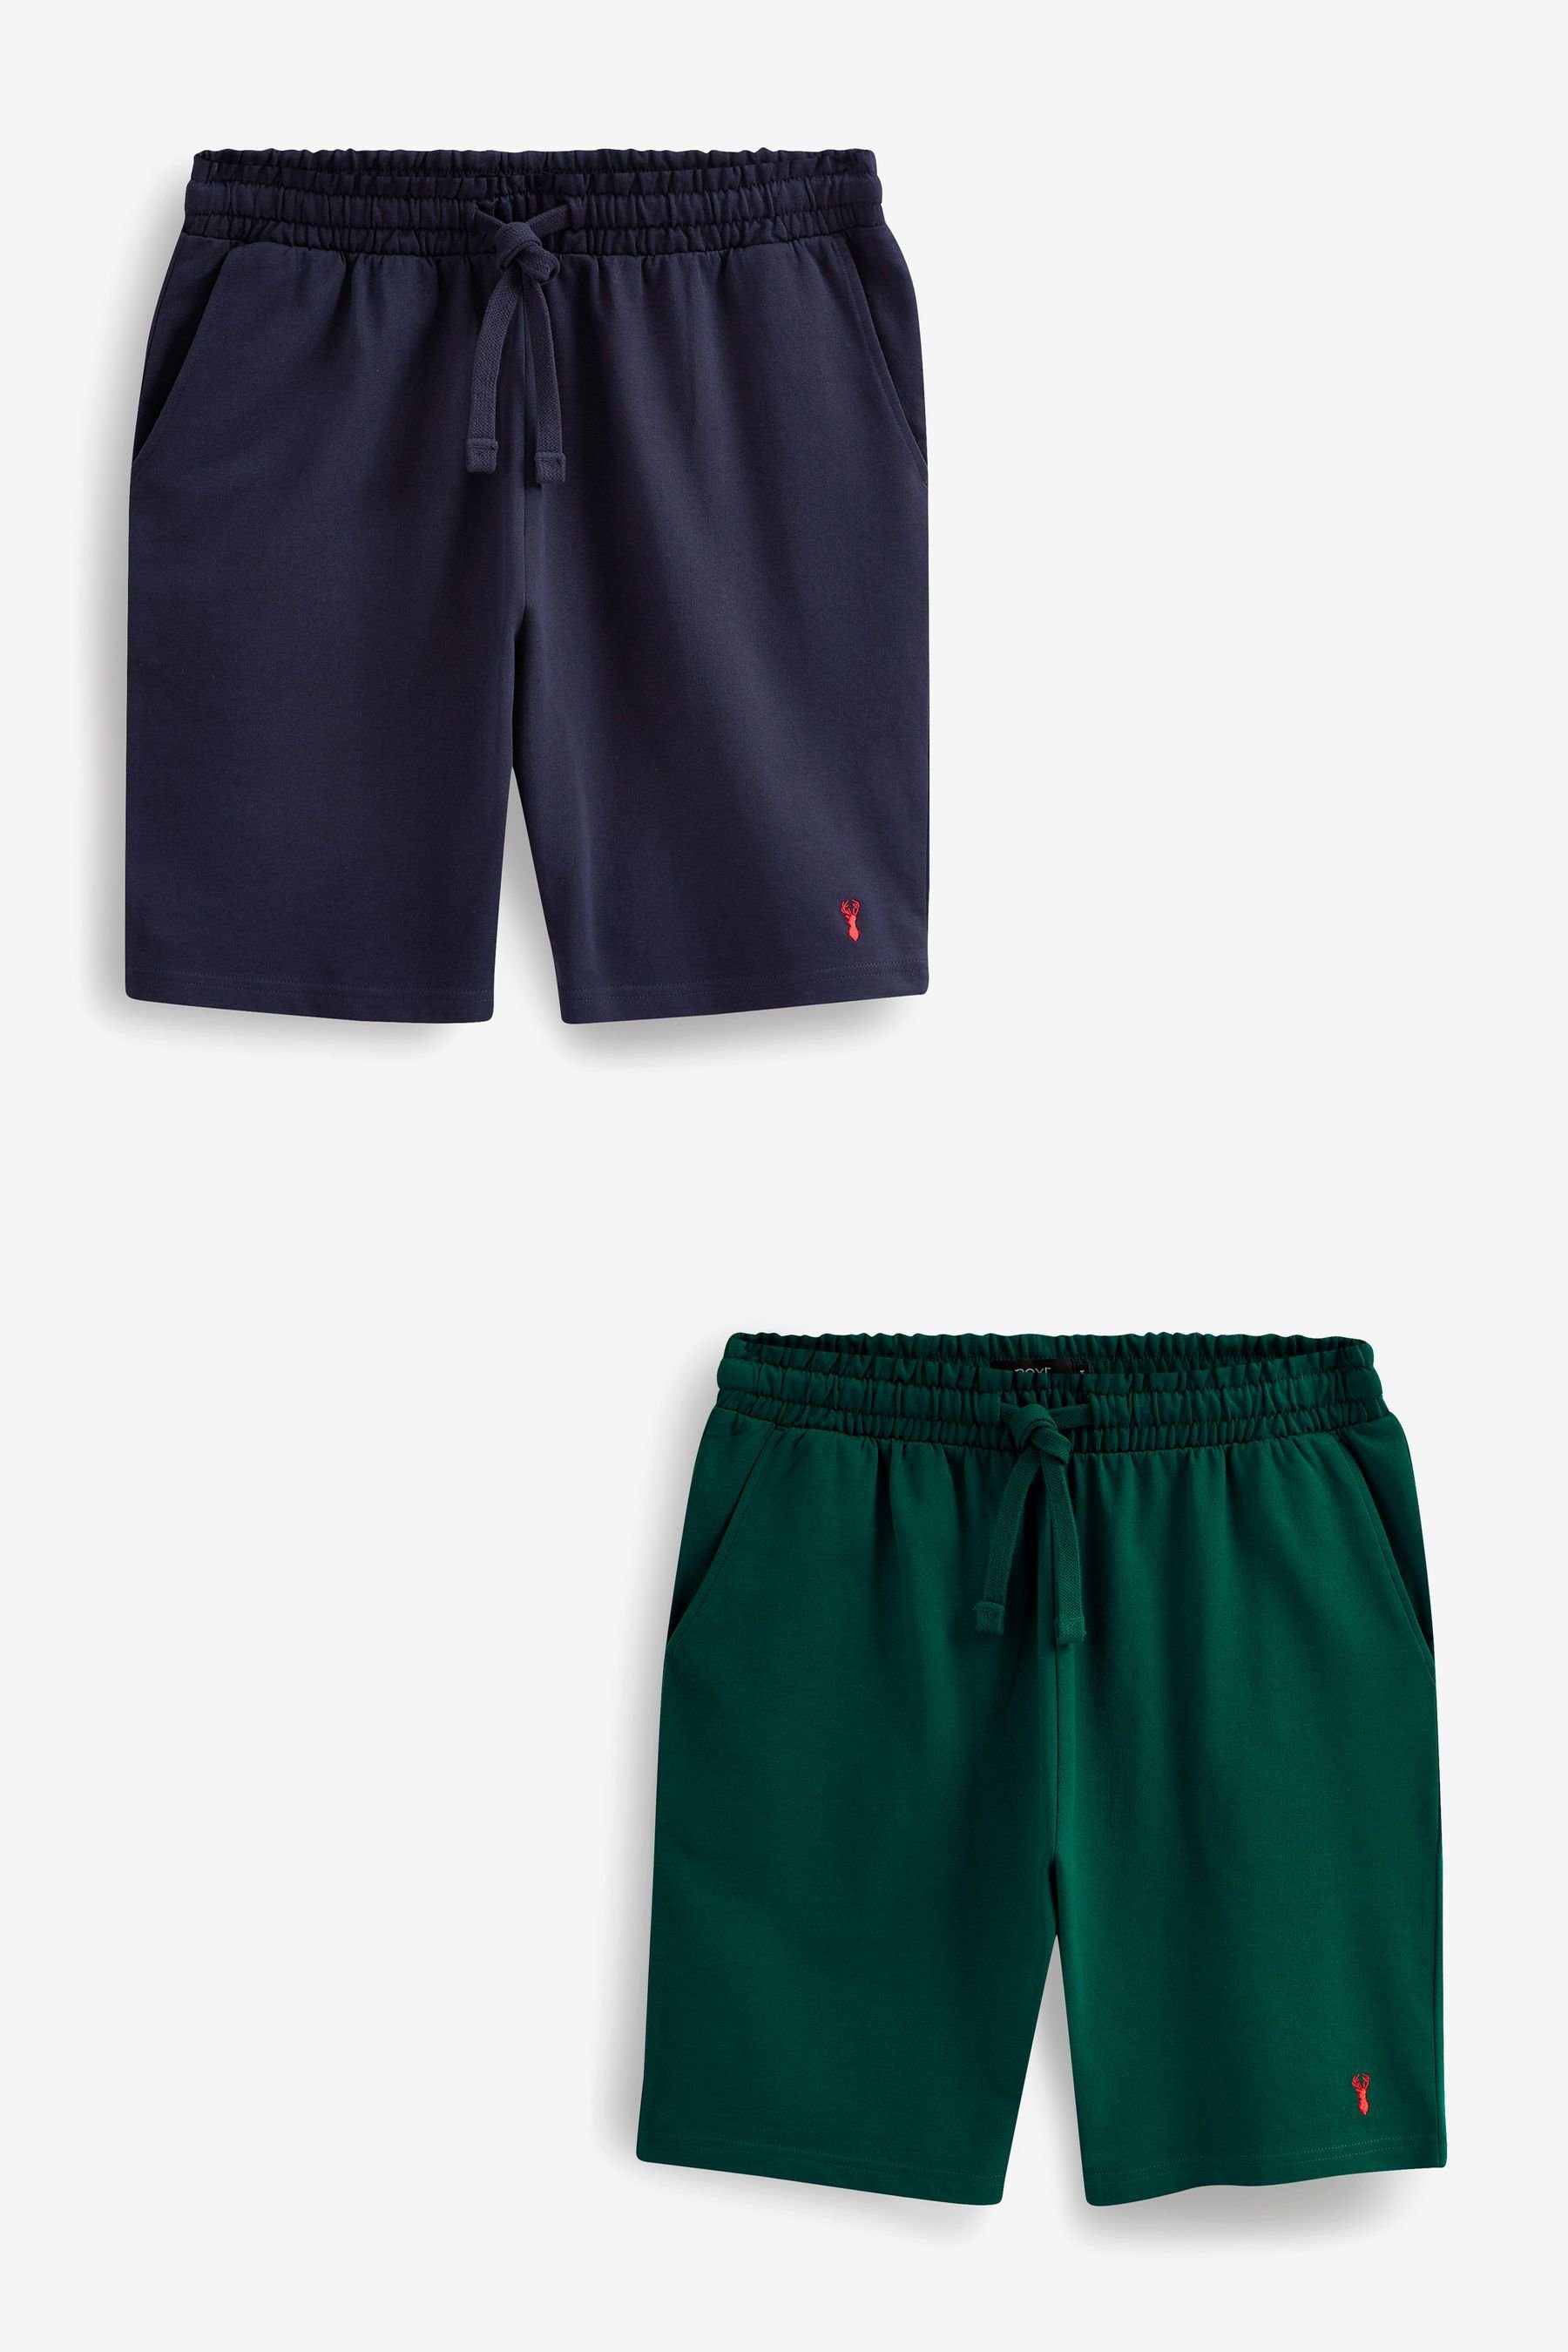 Next Schlafshorts Leichte (2-tlg) Blue Shorts, Green/Navy 2er-Pack